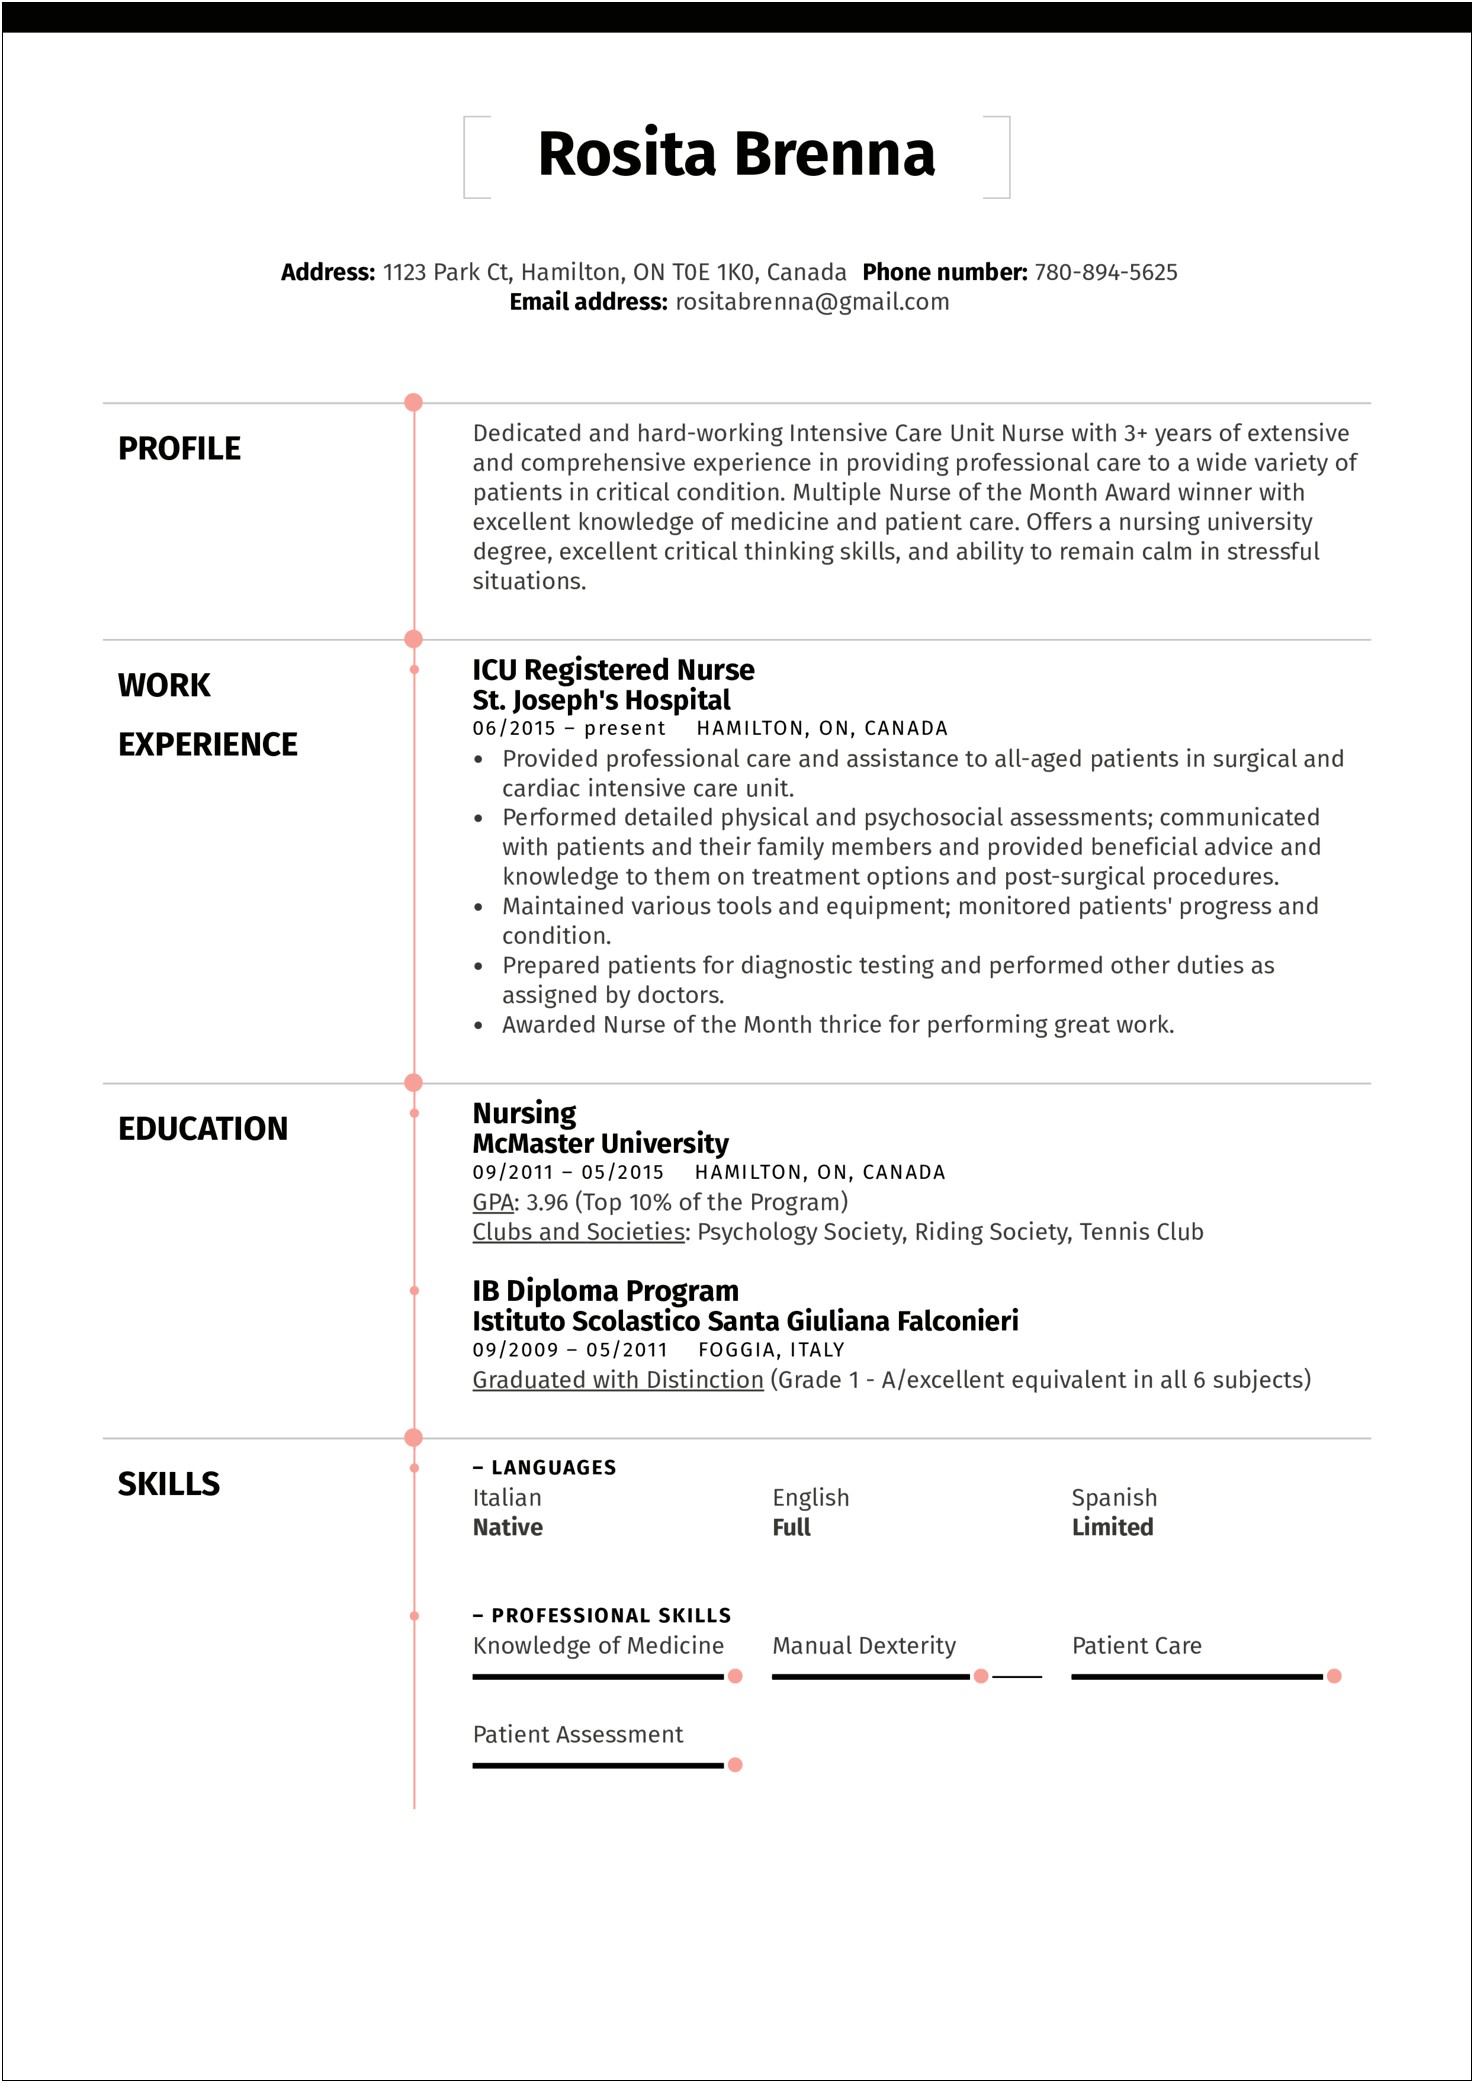 Best Resume Format For Registered Nurses